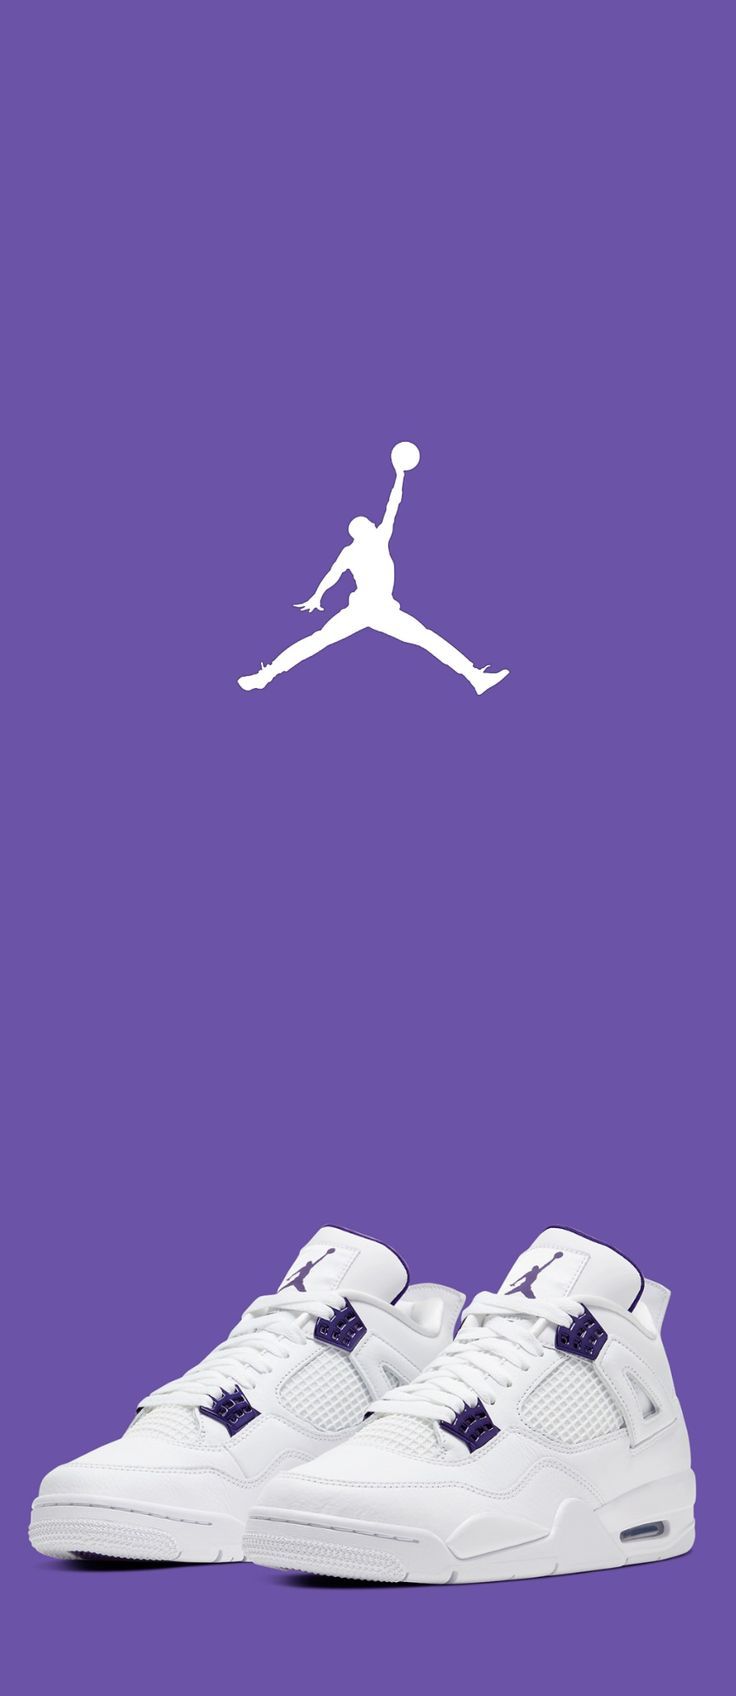 Purple Jordan Wallpapers